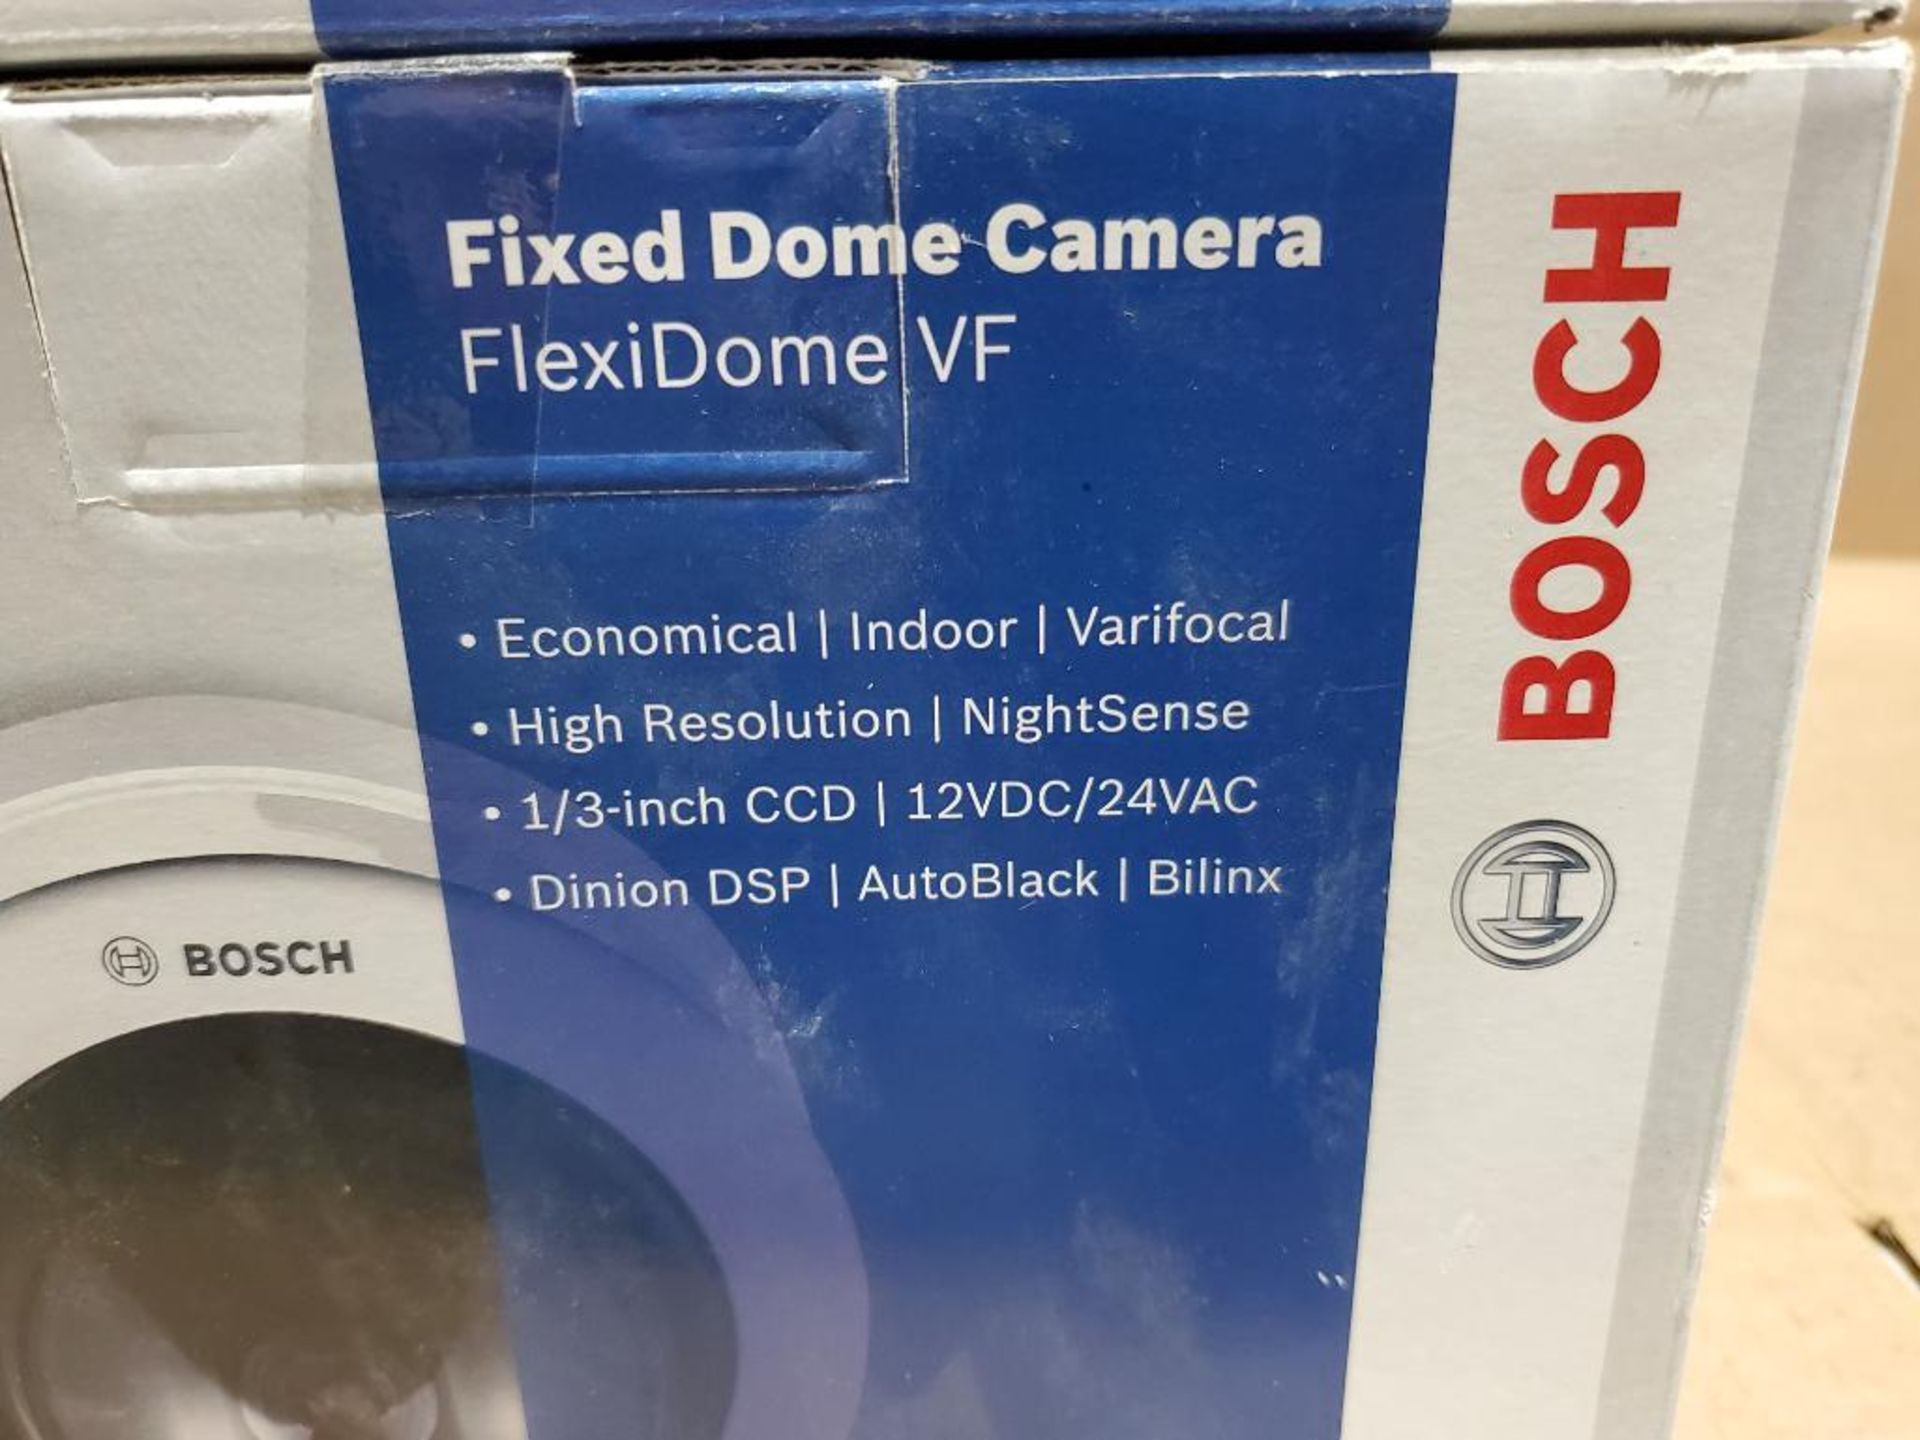 Qty 4 - Bosch fixed dome camera. Model FlexiDome VF. - Image 3 of 3